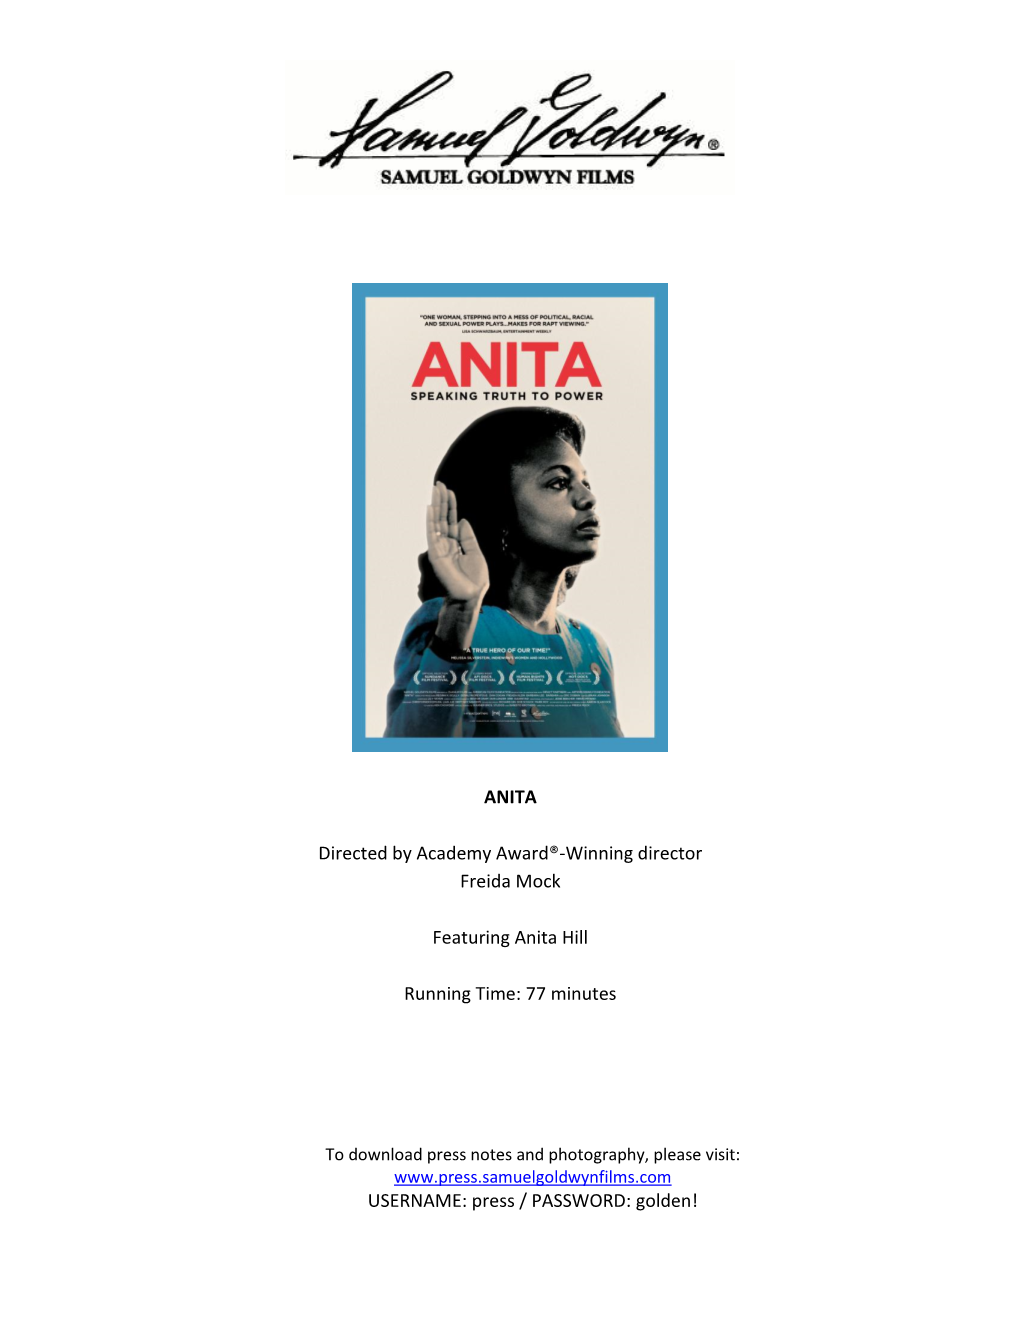 ANITA Directed by Academy Award®-Winning Director Freida Mock Featuring Anita Hill Running Time: 77 Minutes USERNAME: Press